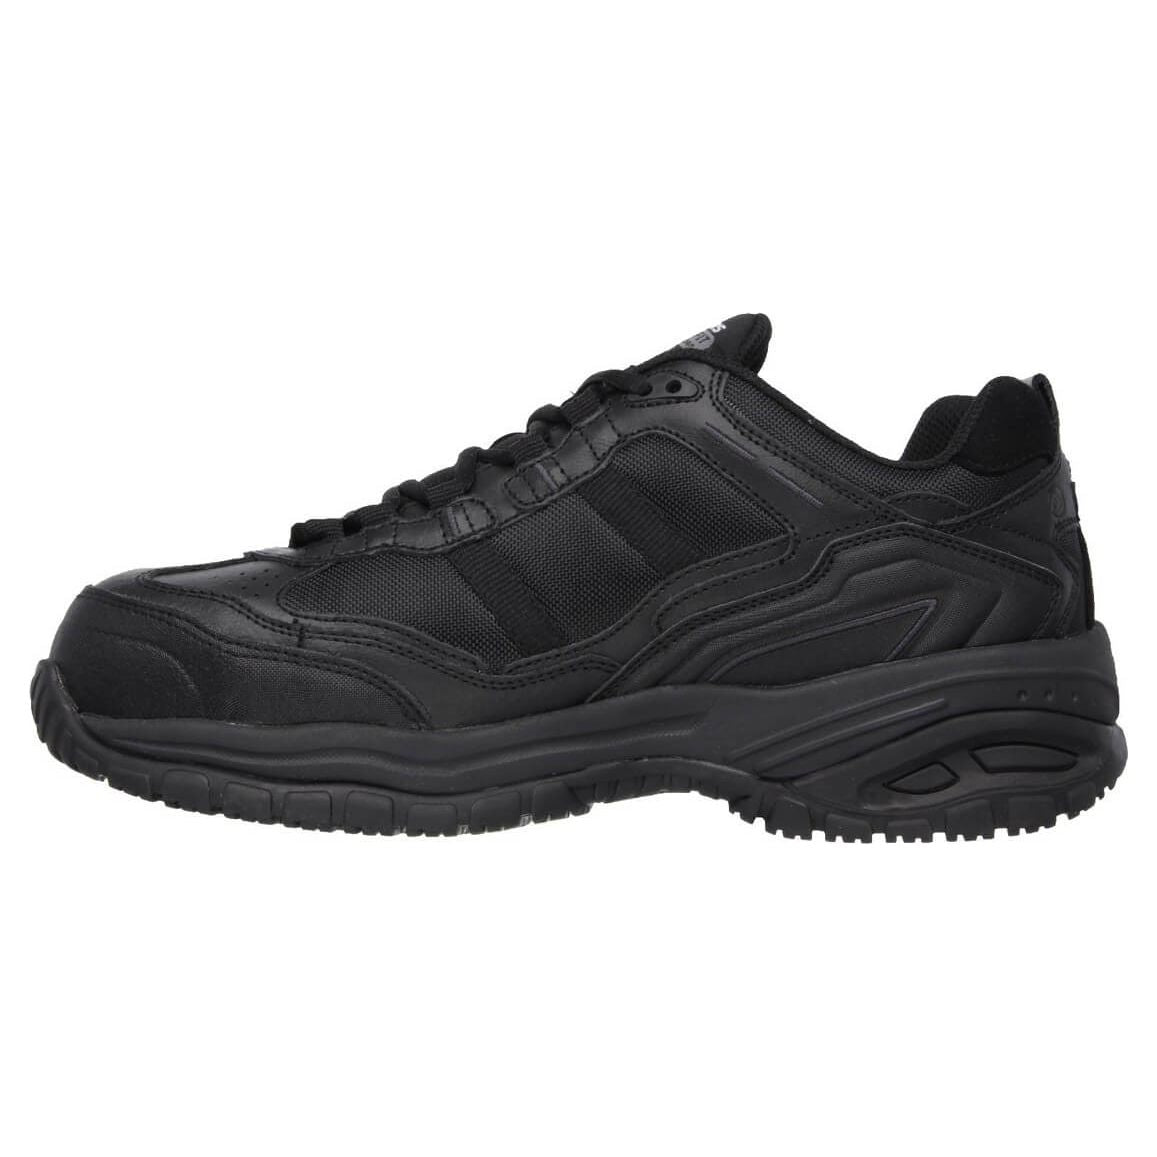 Skechers Grinnell Soft Stride Safety Shoes-Black-7